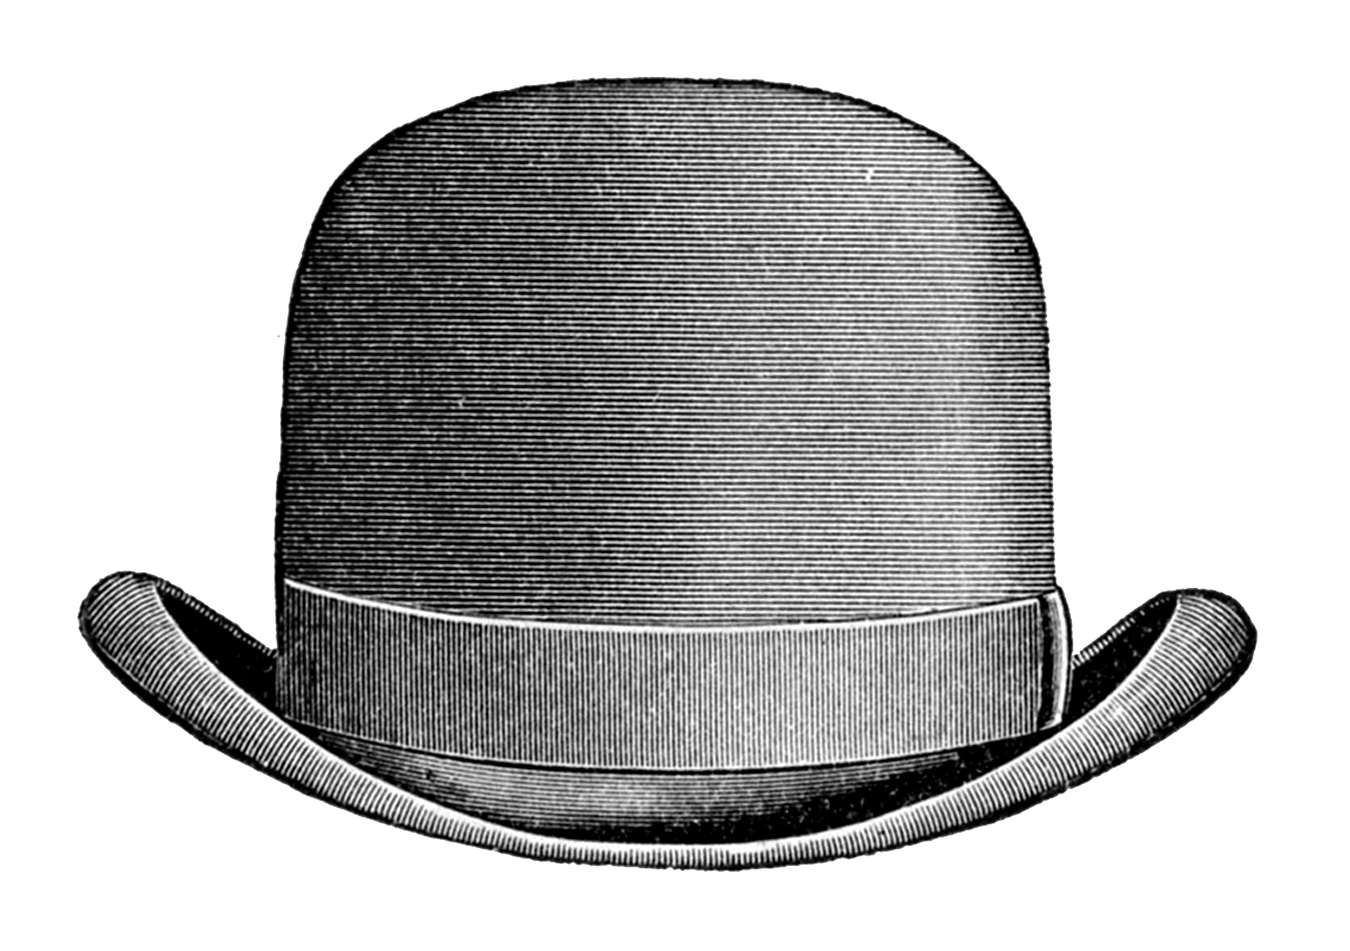 free clip art bowler hat - photo #30